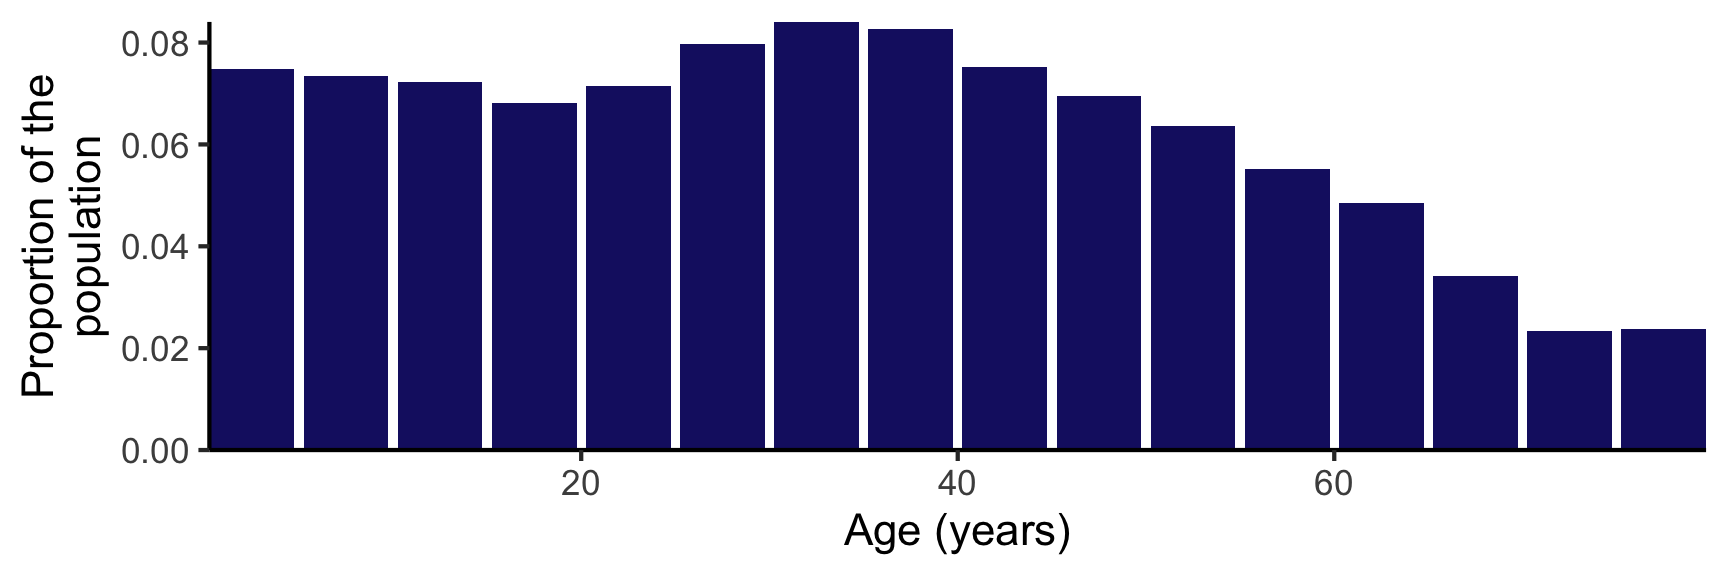 Age distribution of the Australian population